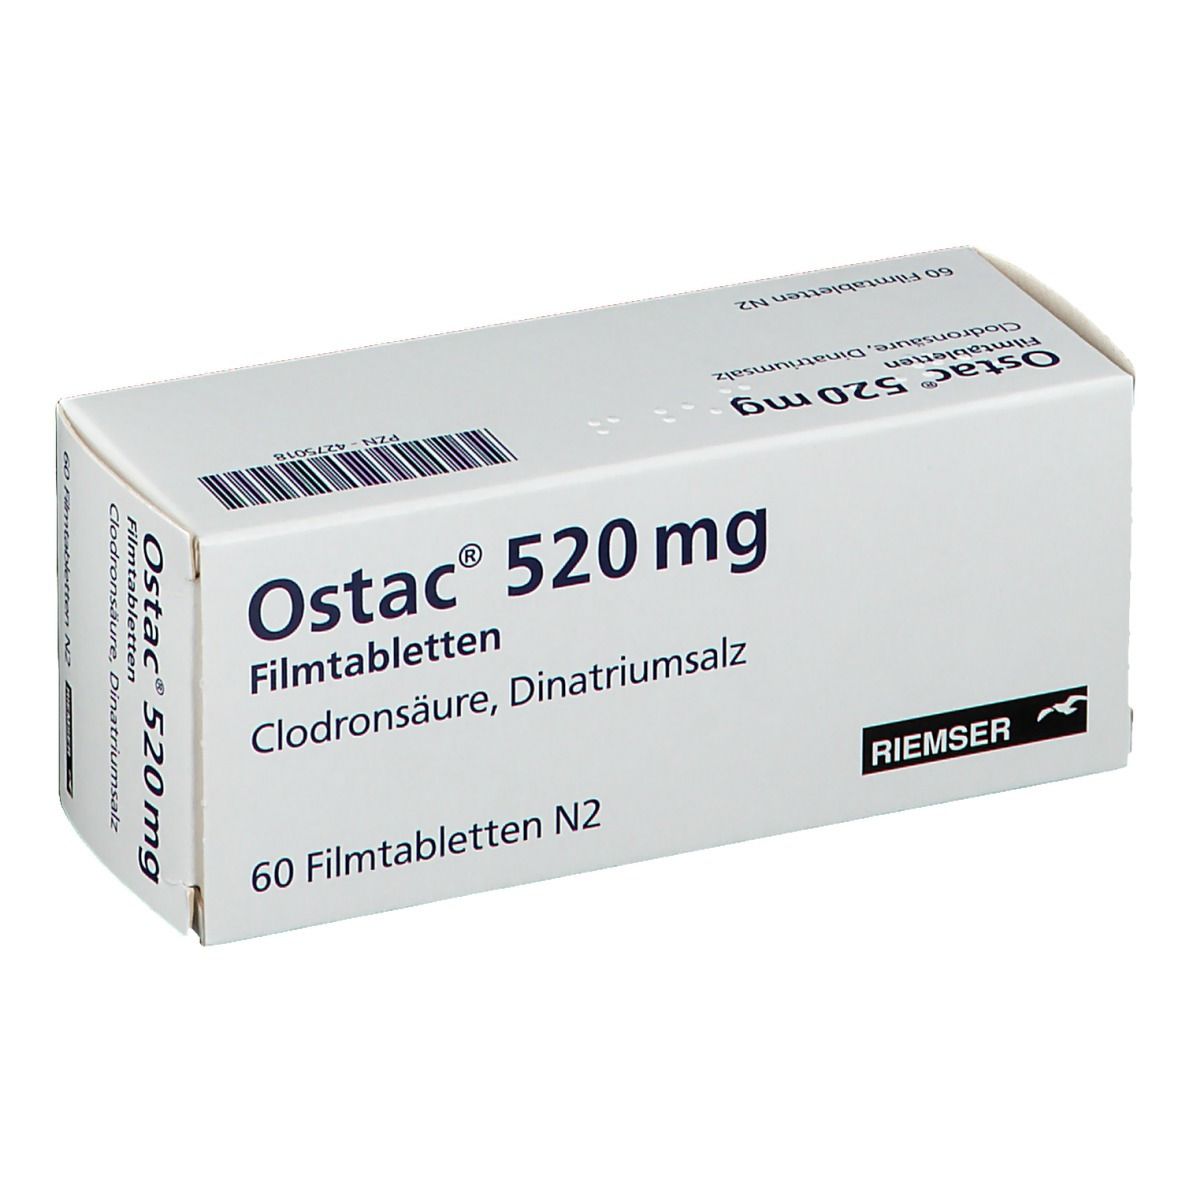 Ostac® 520 mg